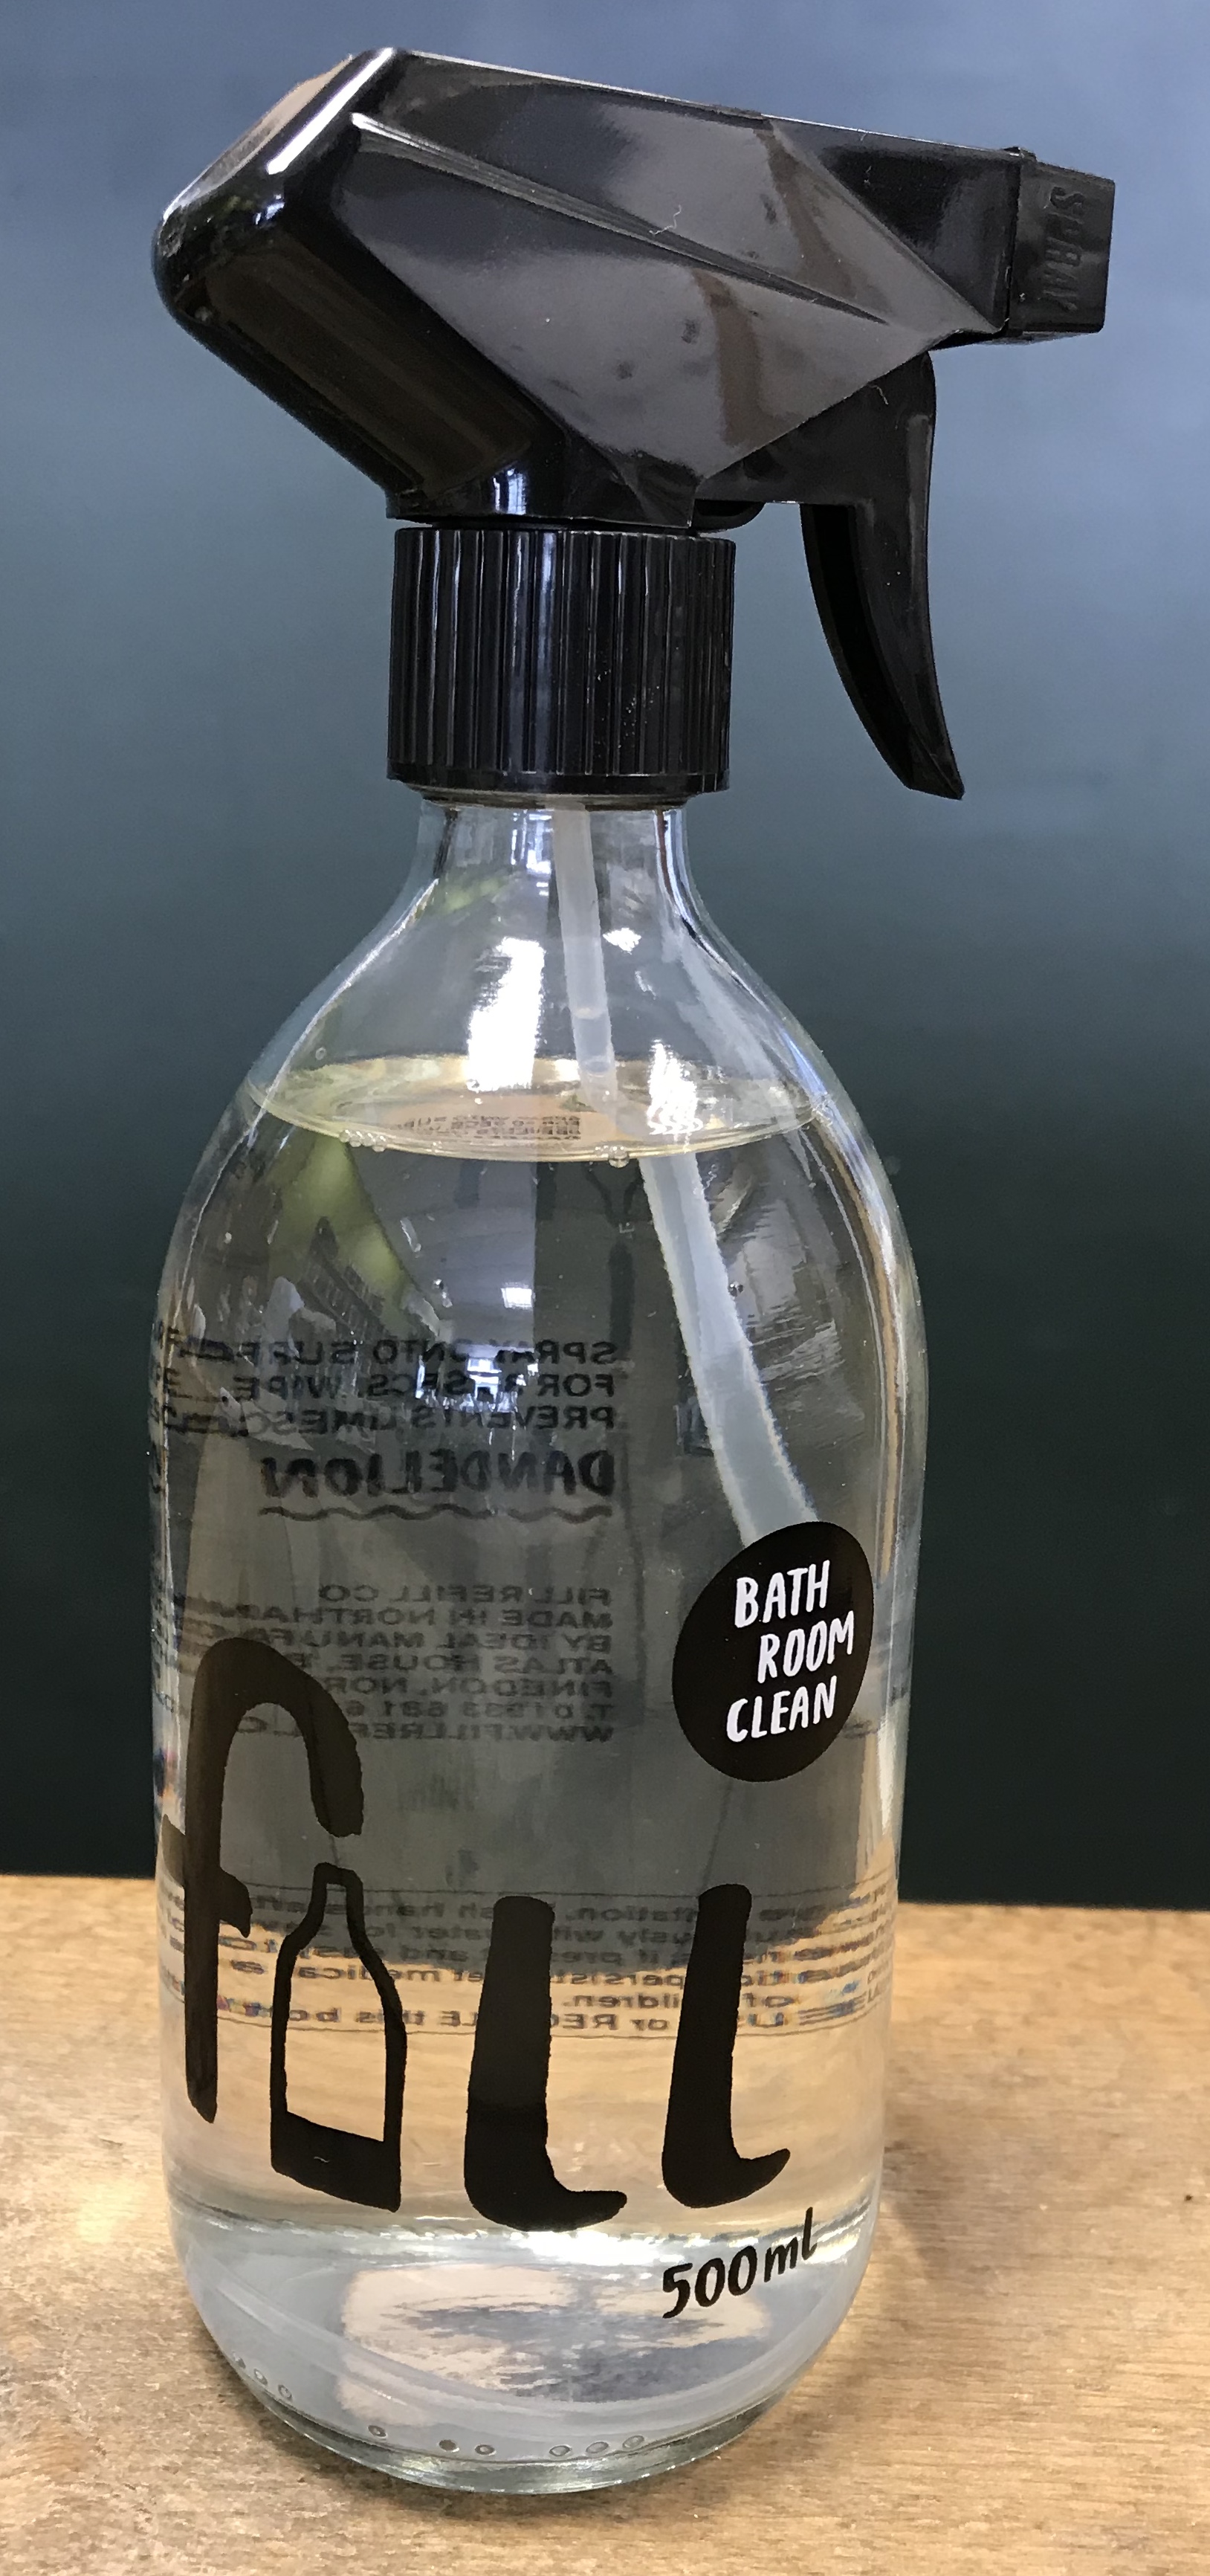 Bathroom Clean 500ml Bottle